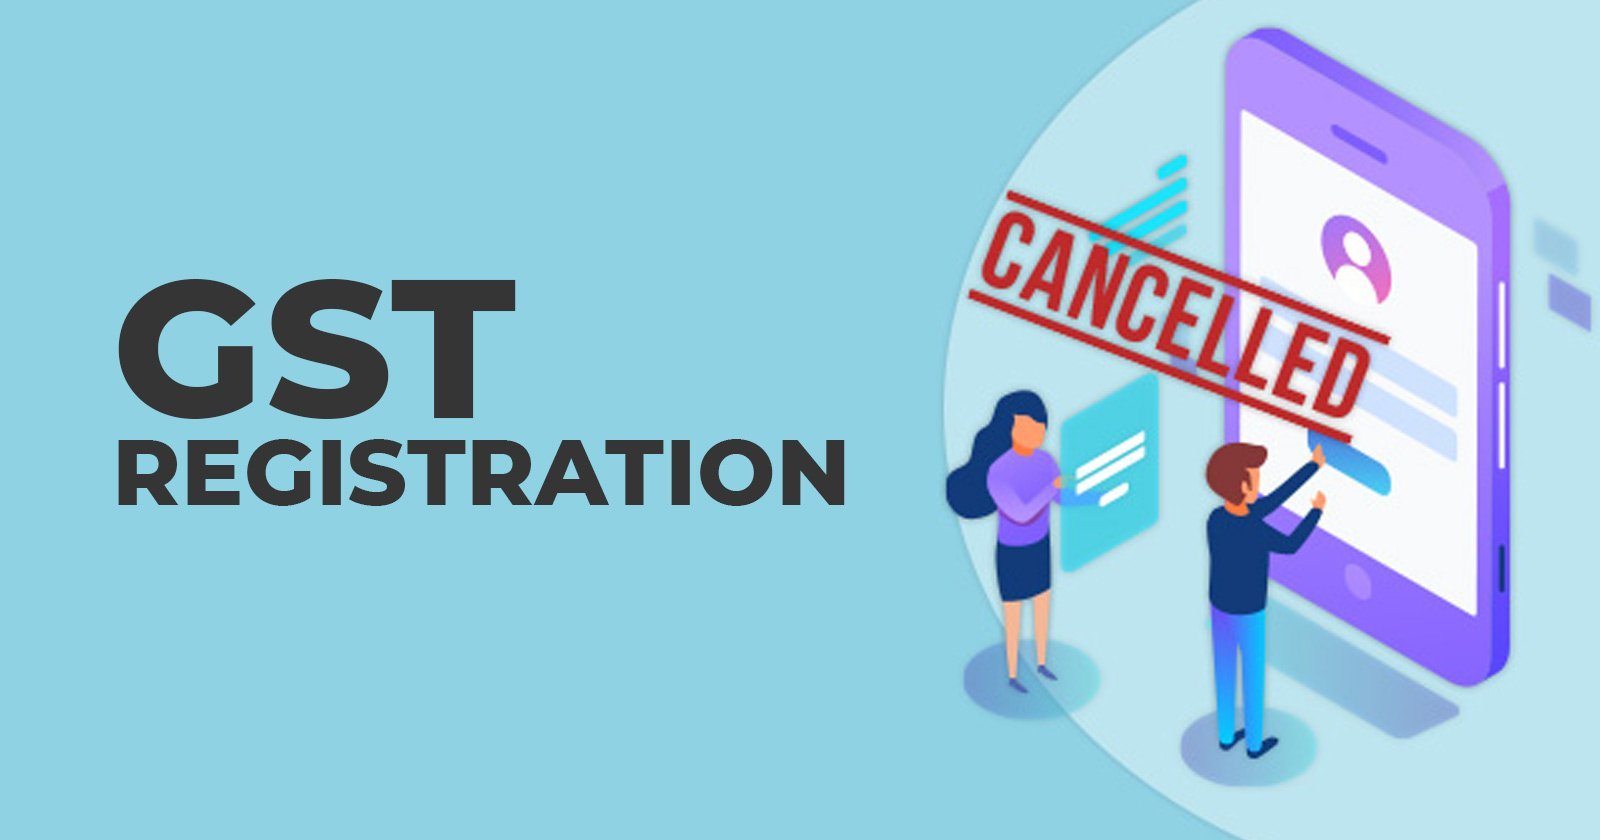 Cancellation - GST Registration - Non-Payment - Tax-Madras HC - Revive GST Registration-taxscan